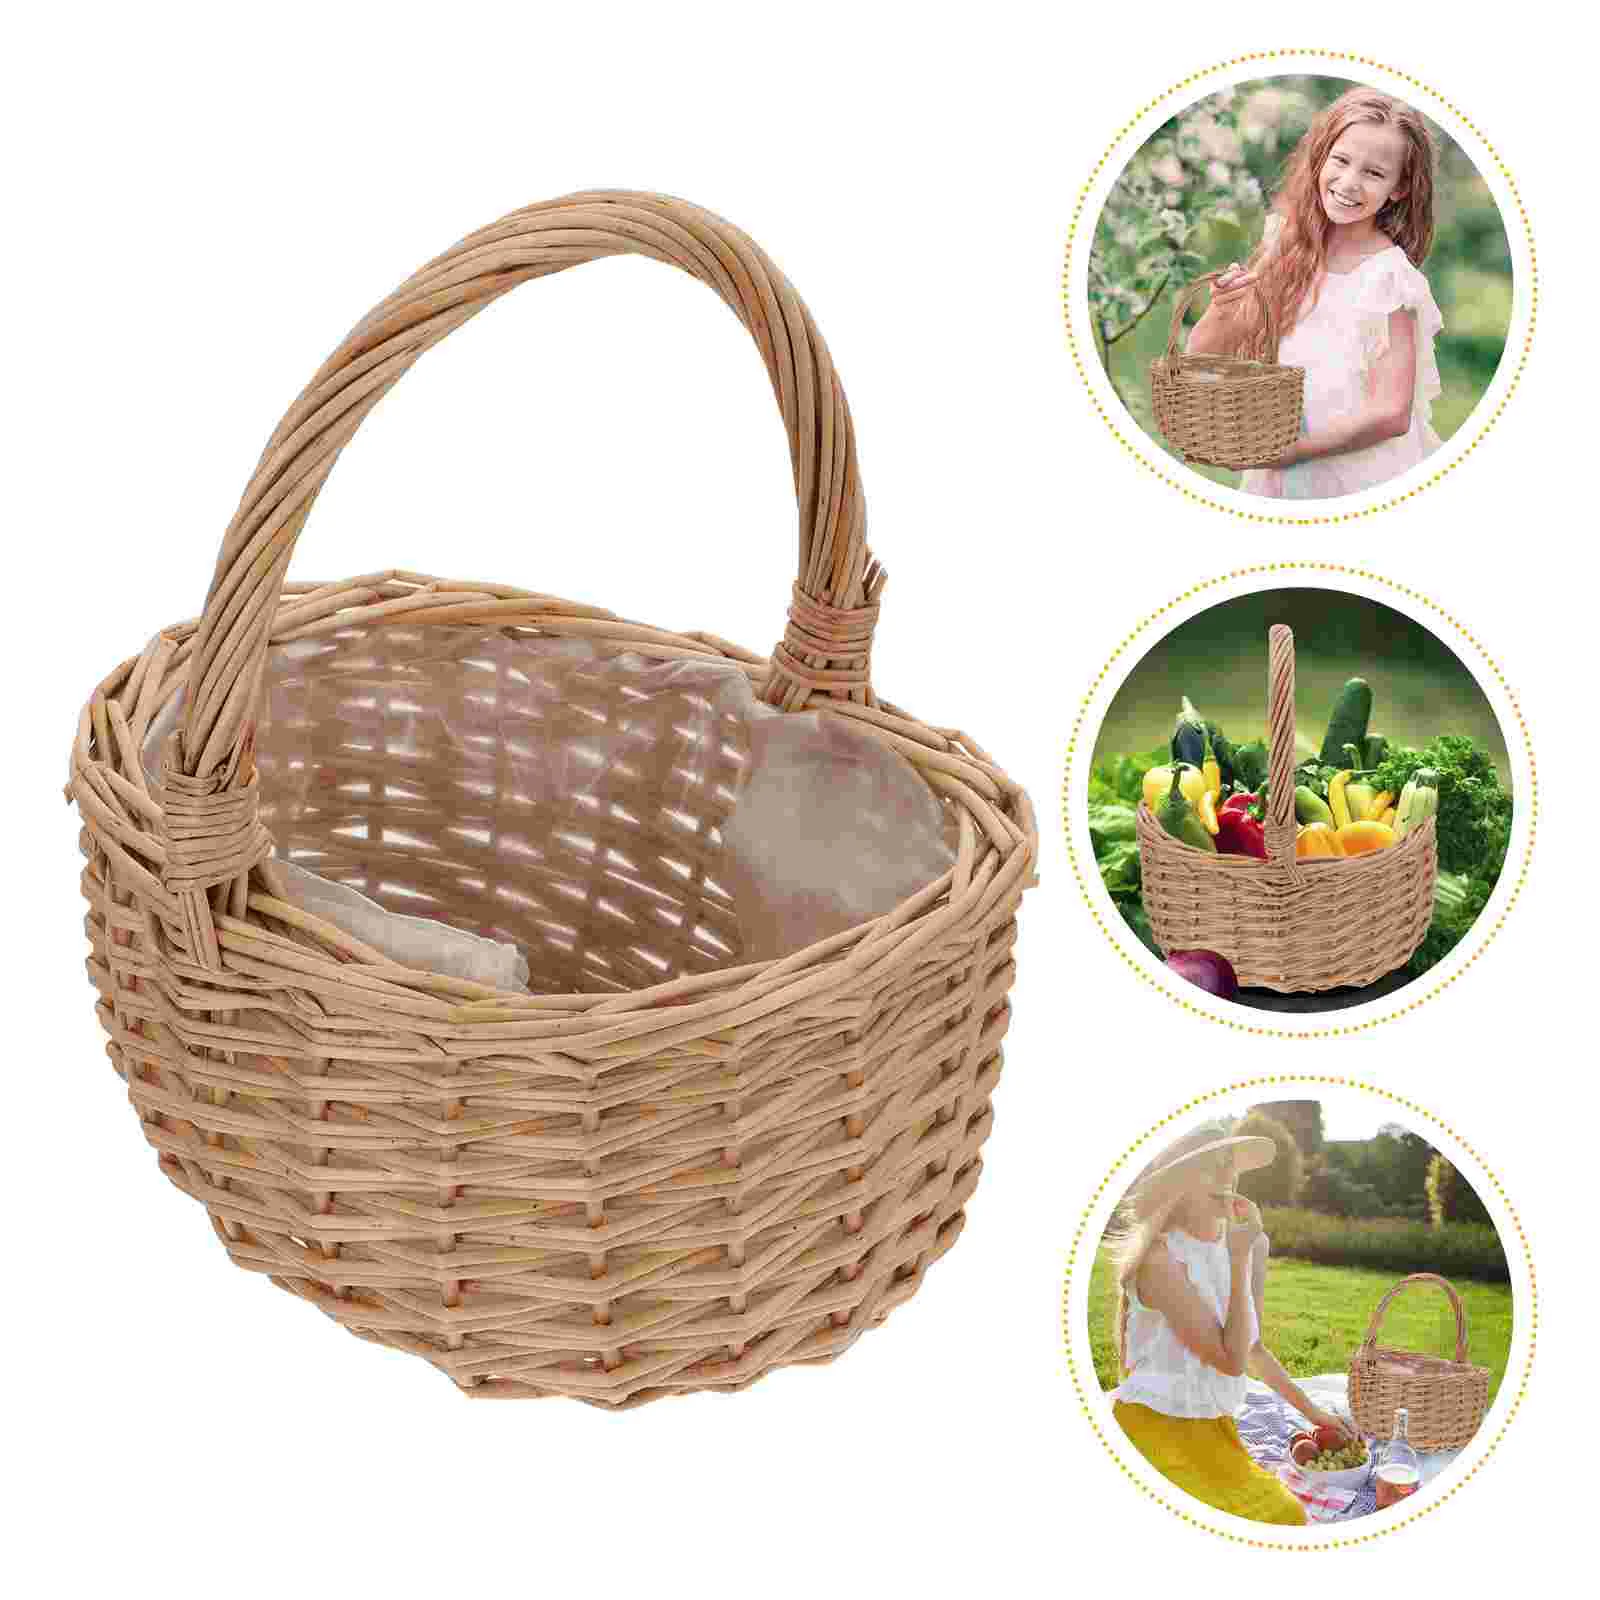 Basket Candy Rattan Wicker Gift Flower Baskets Large Vegetable Storagebath Picnic Fruit Girl Handle Willow Wedding